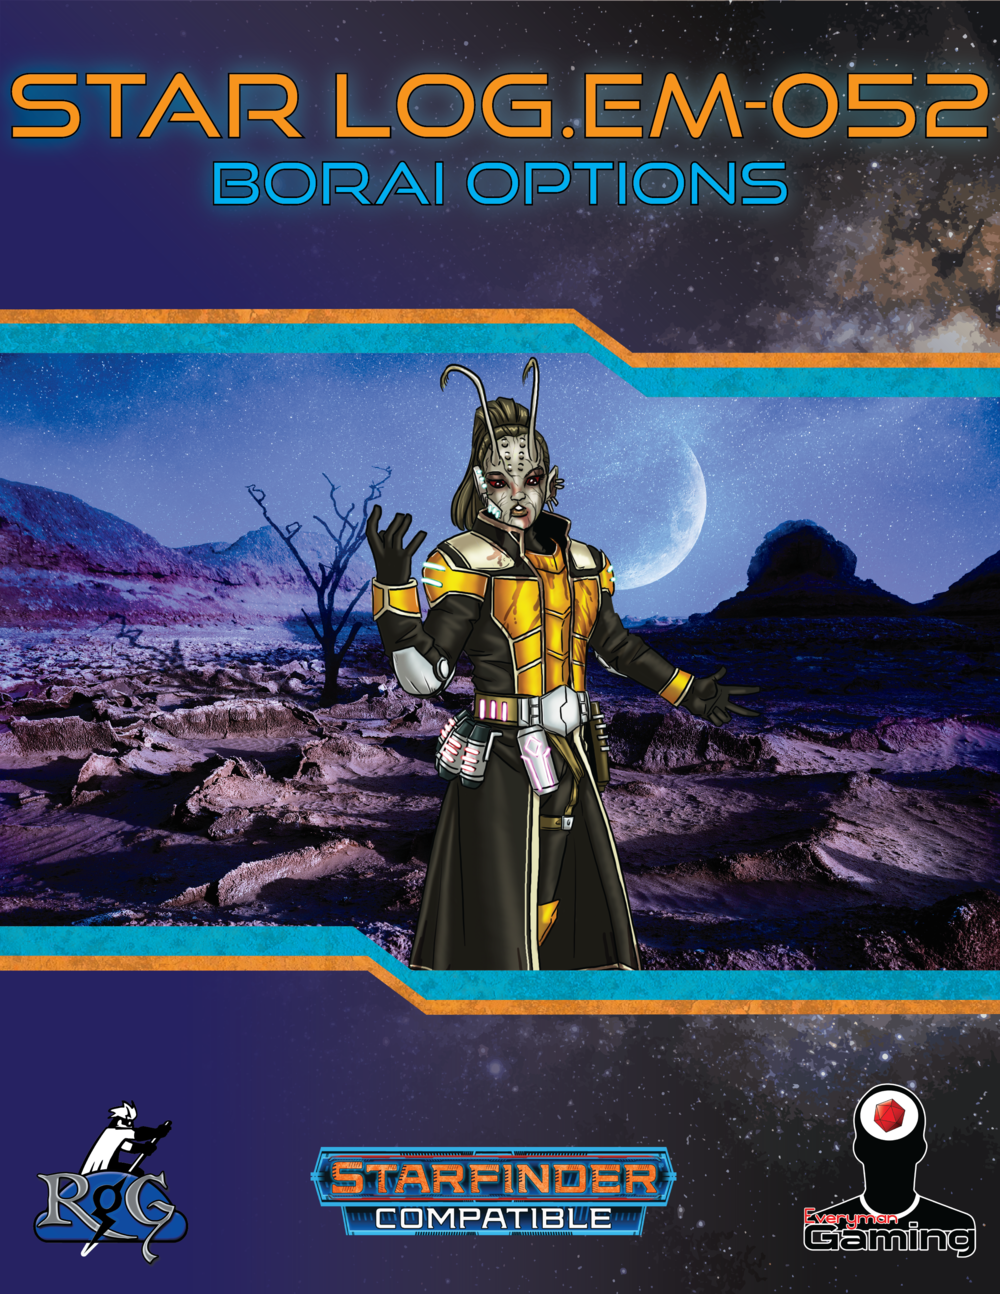 Star Log.EM-052: Borai Options